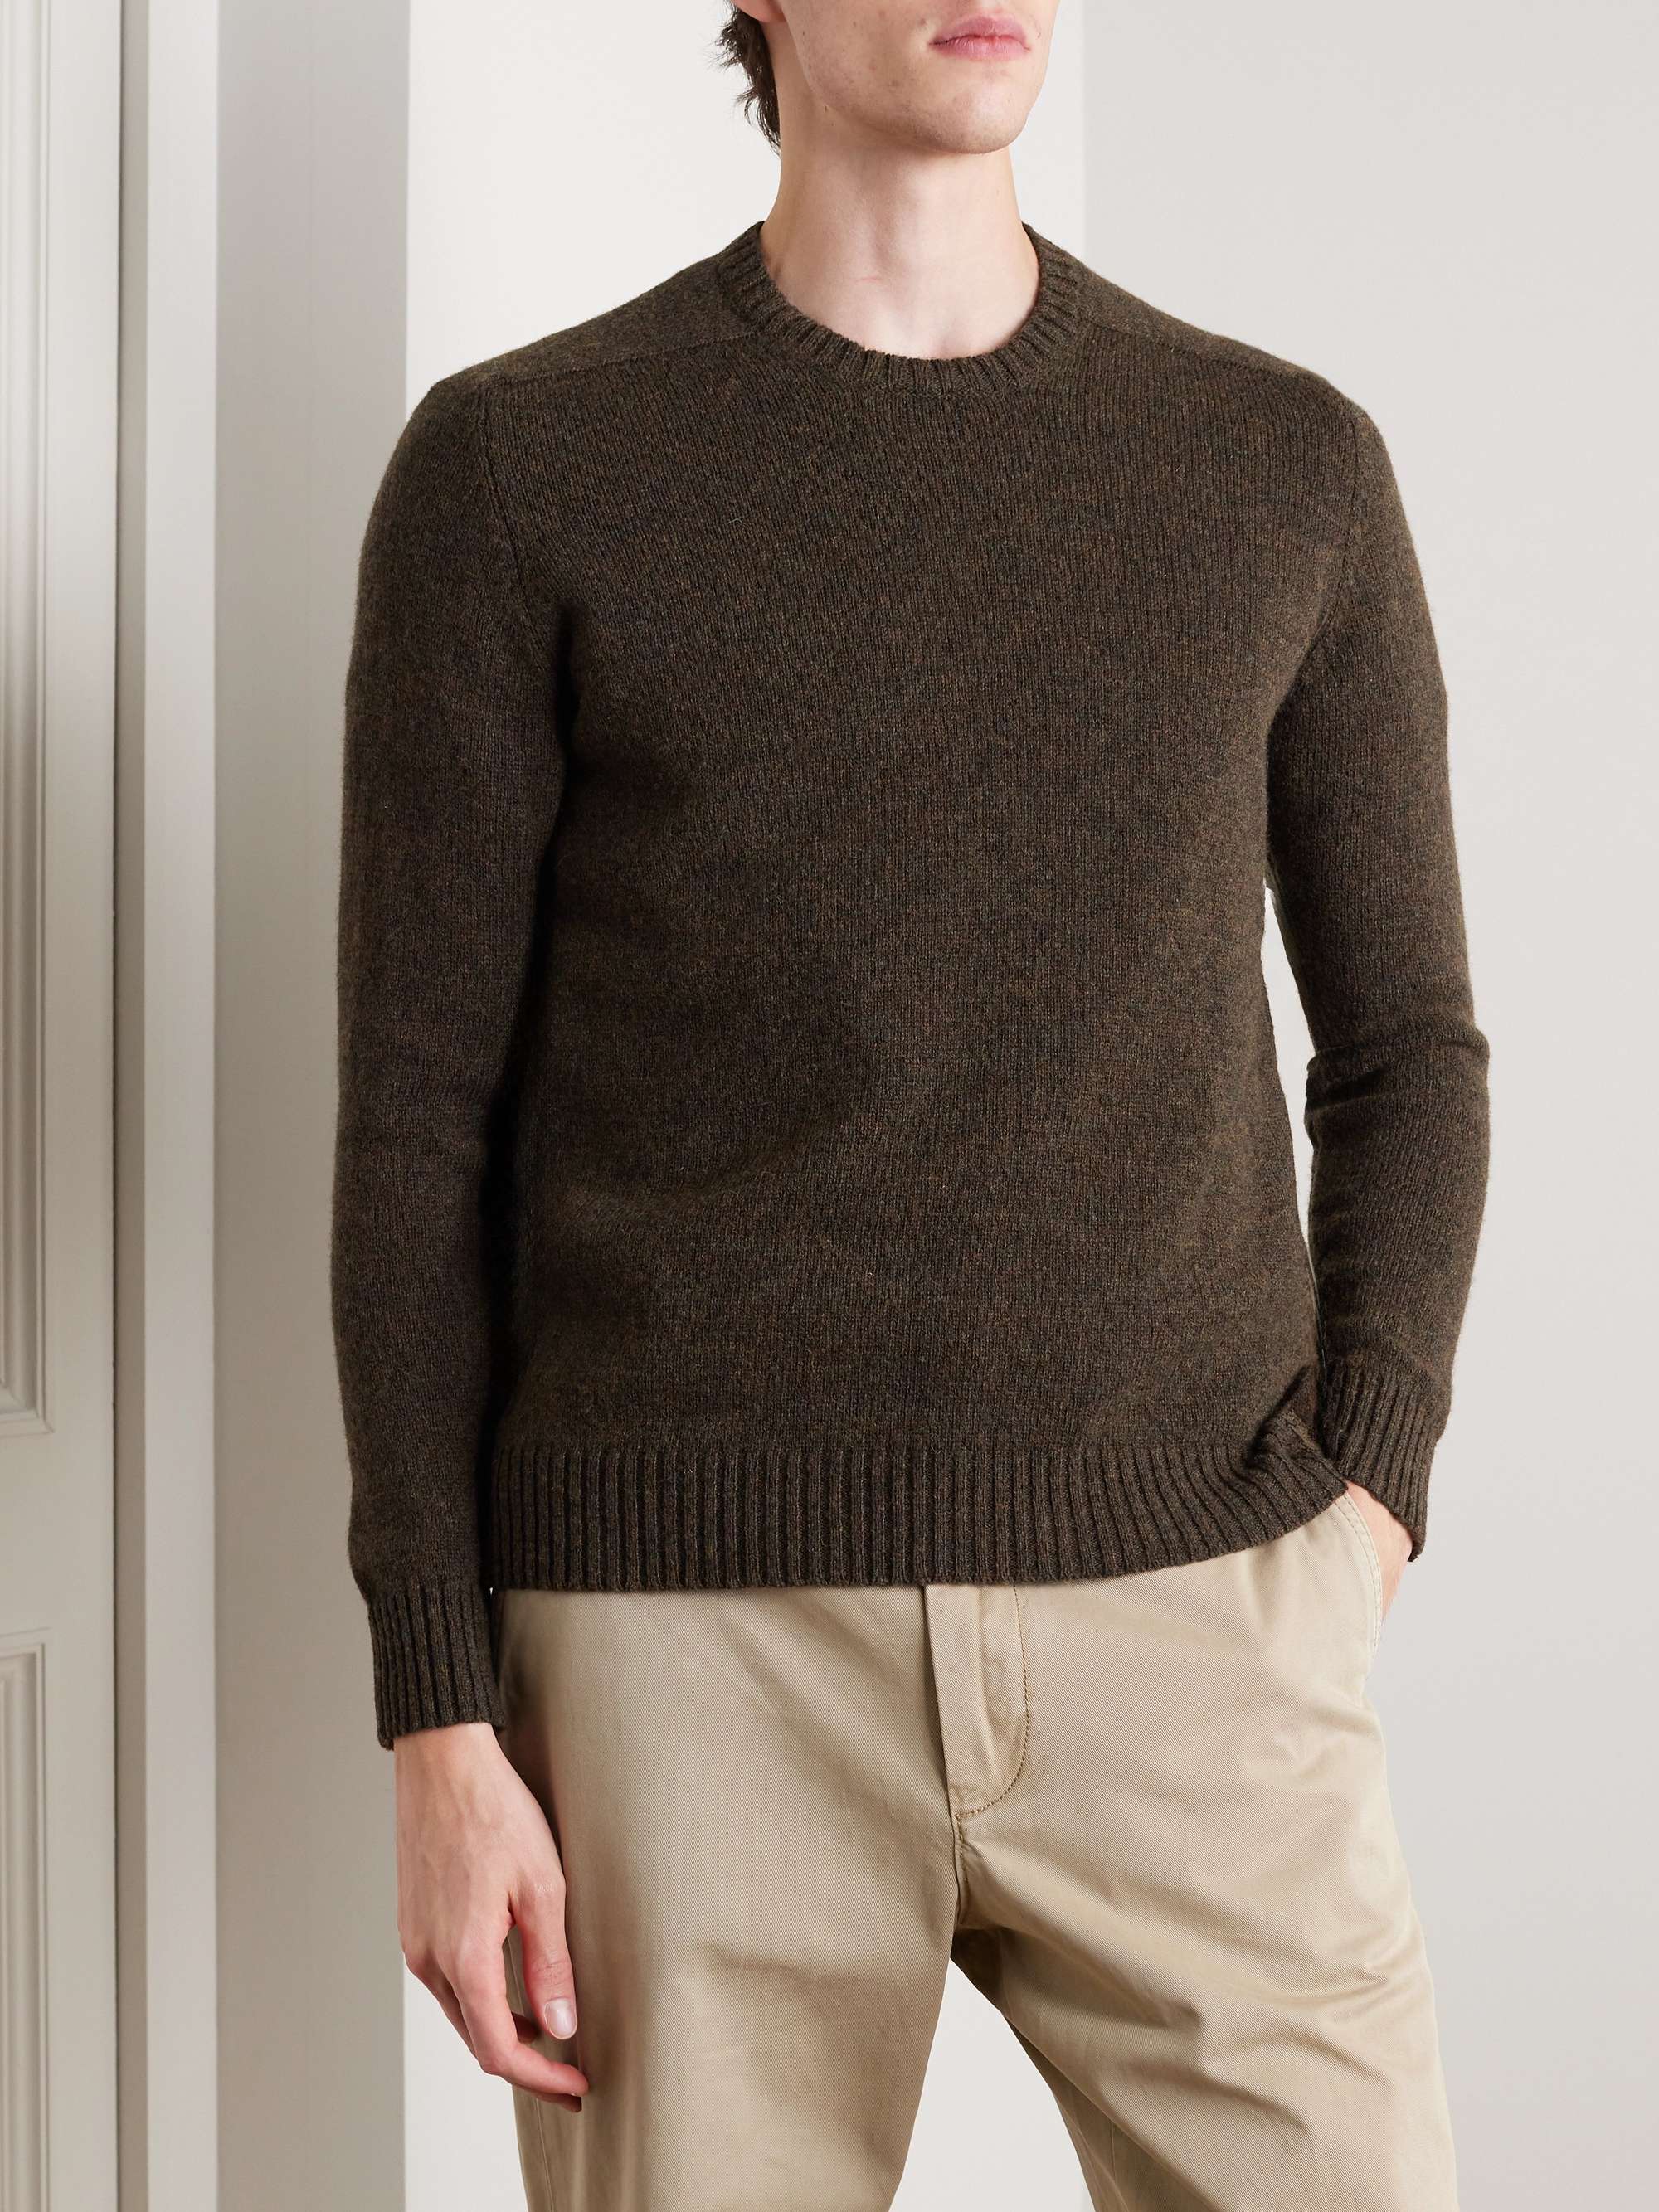 ANDERSON & SHEPPARD Shetland Wool Sweater for Men | MR PORTER